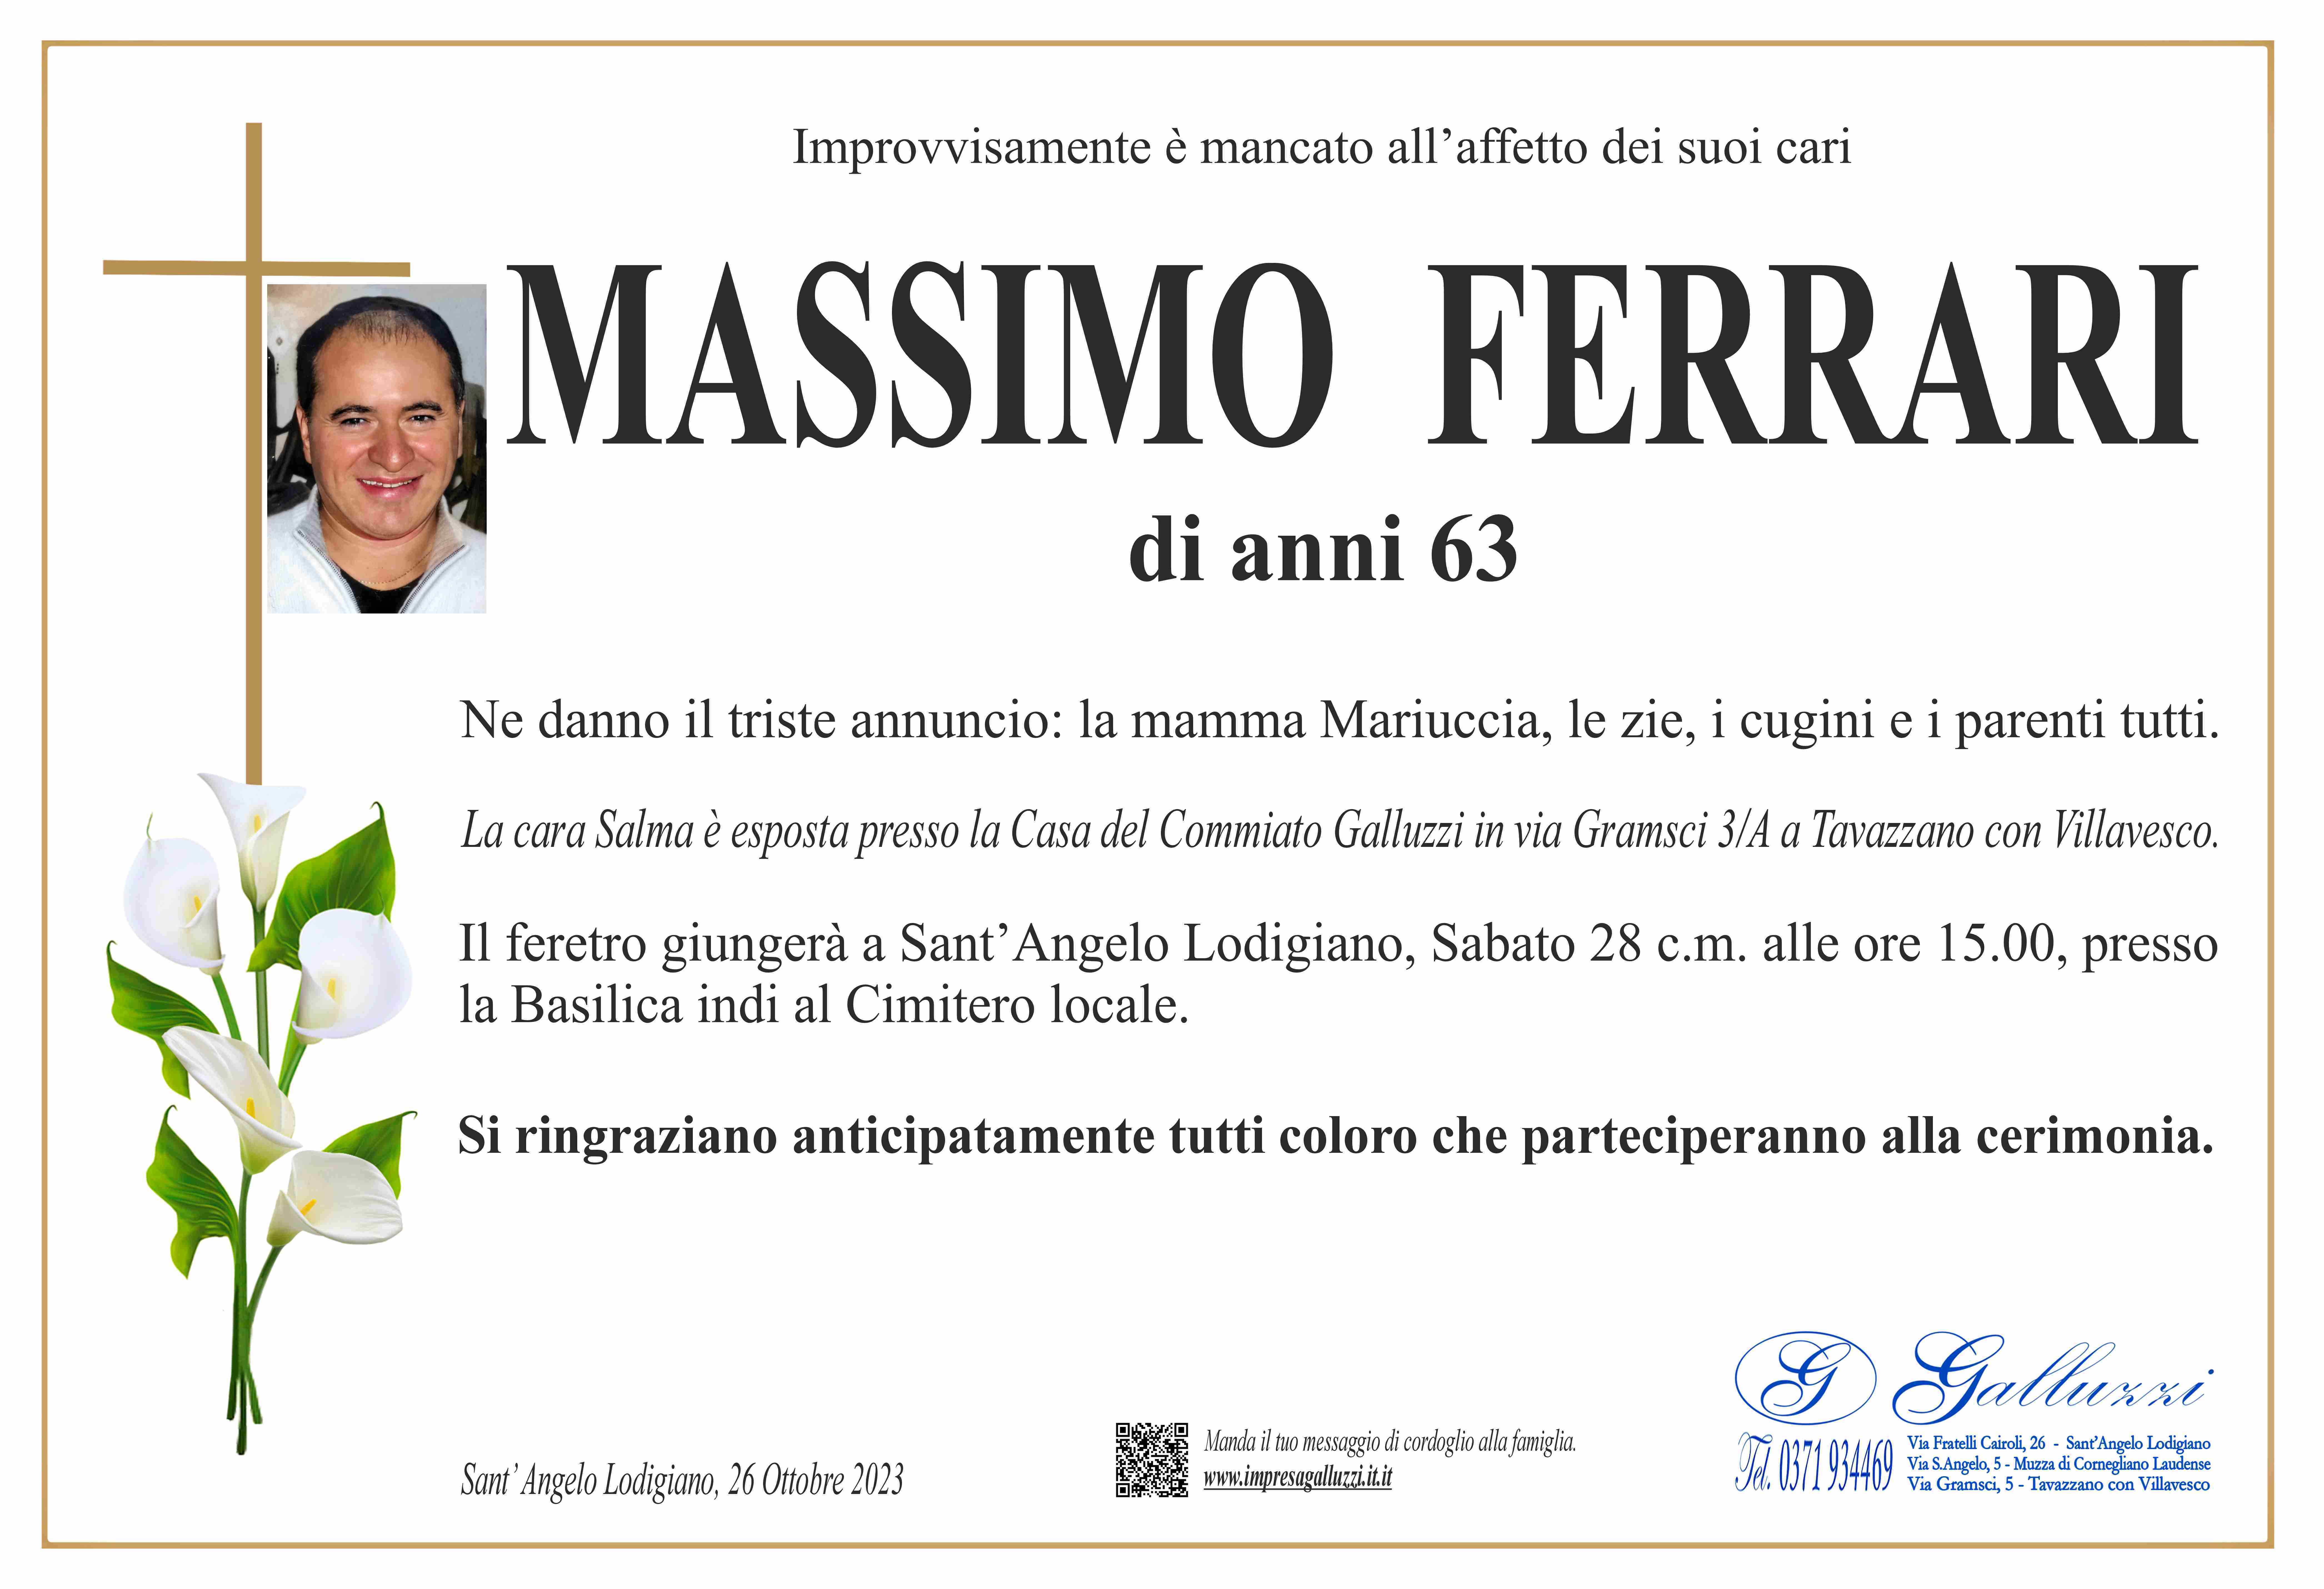 Massimo Ferrari